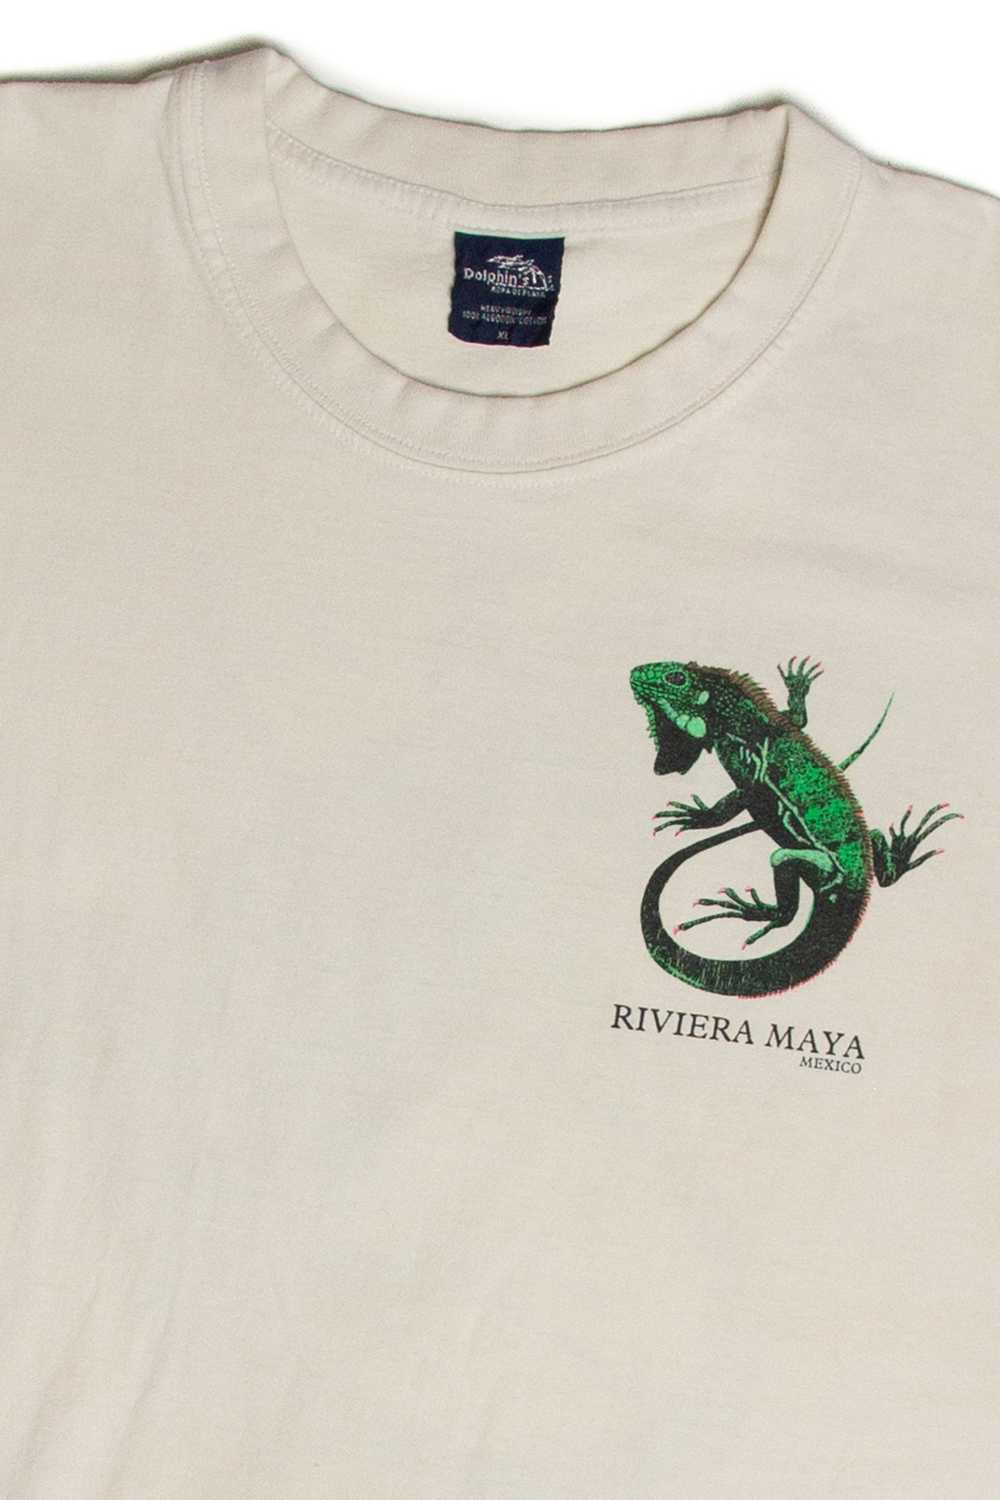 Vintage Riviera Maya T-Shirt - image 5